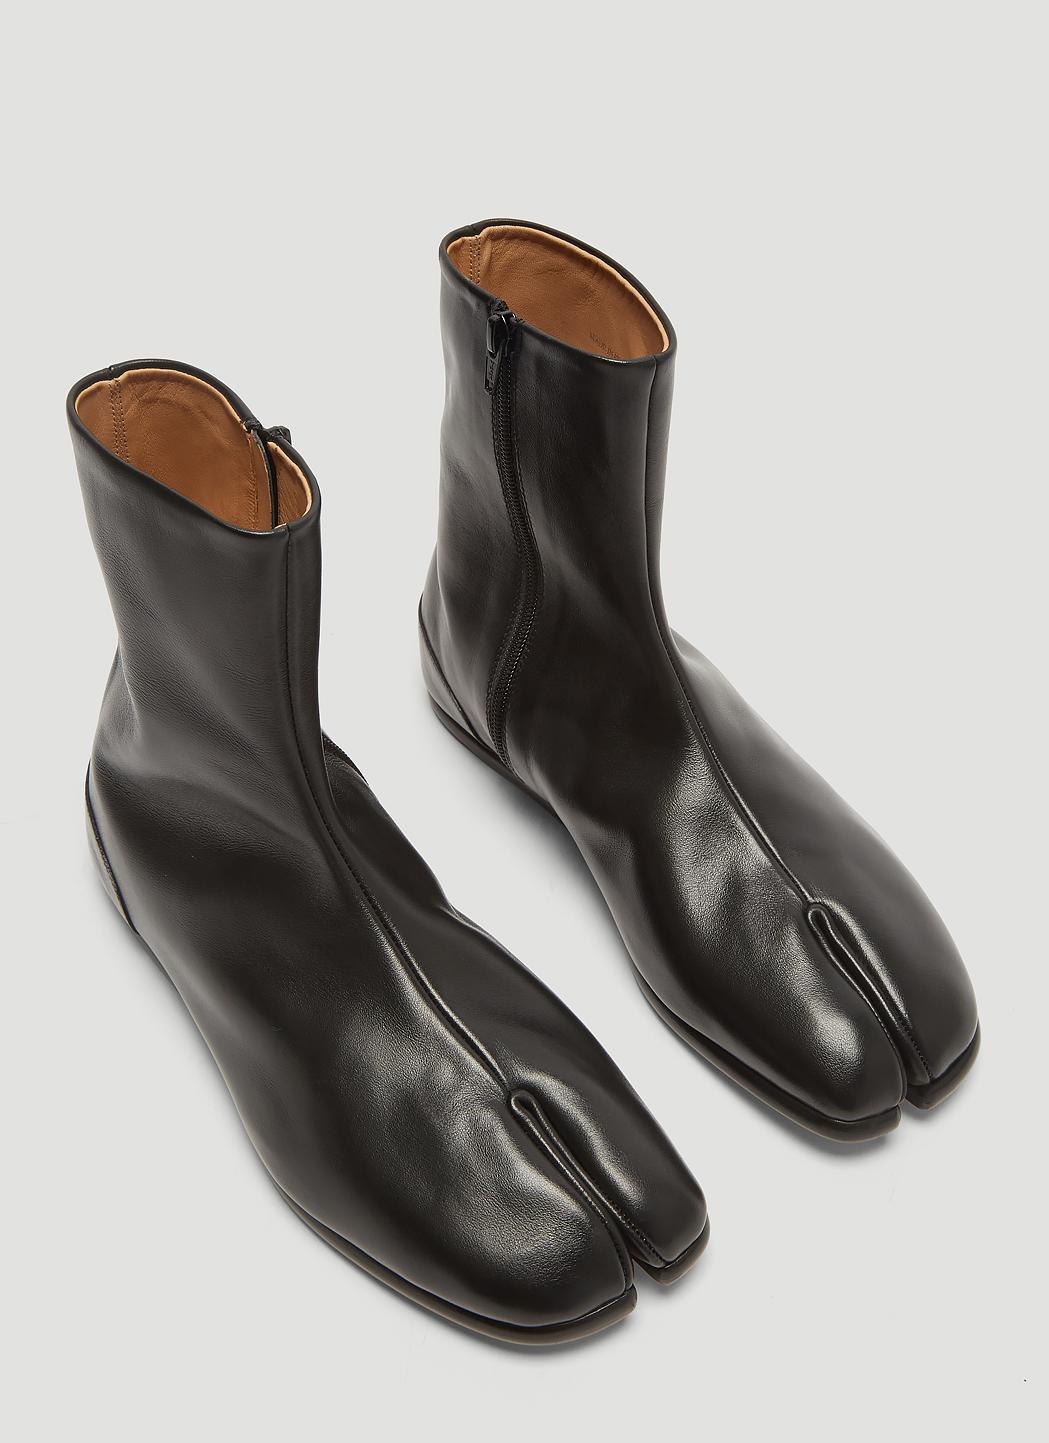 Maison Margiela Leather Tabi Boots In Black for Men - Lyst